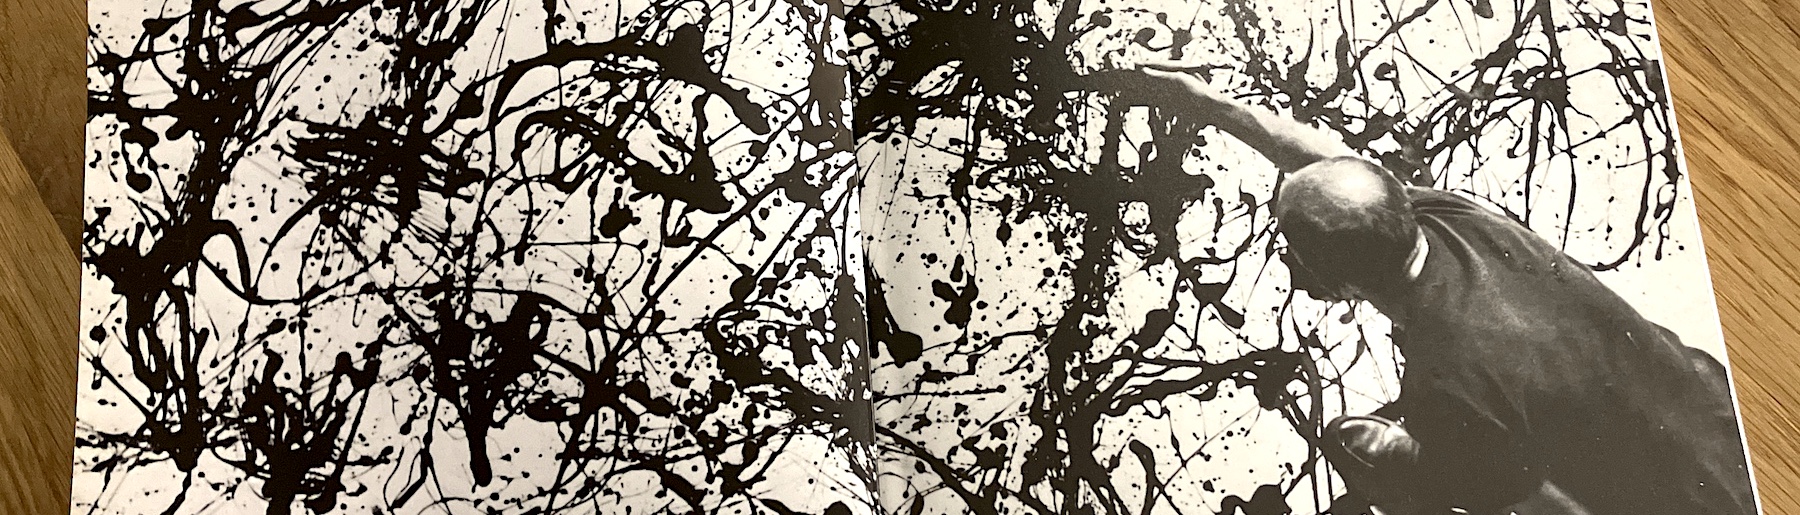 Jackson Pollock's unique painting style